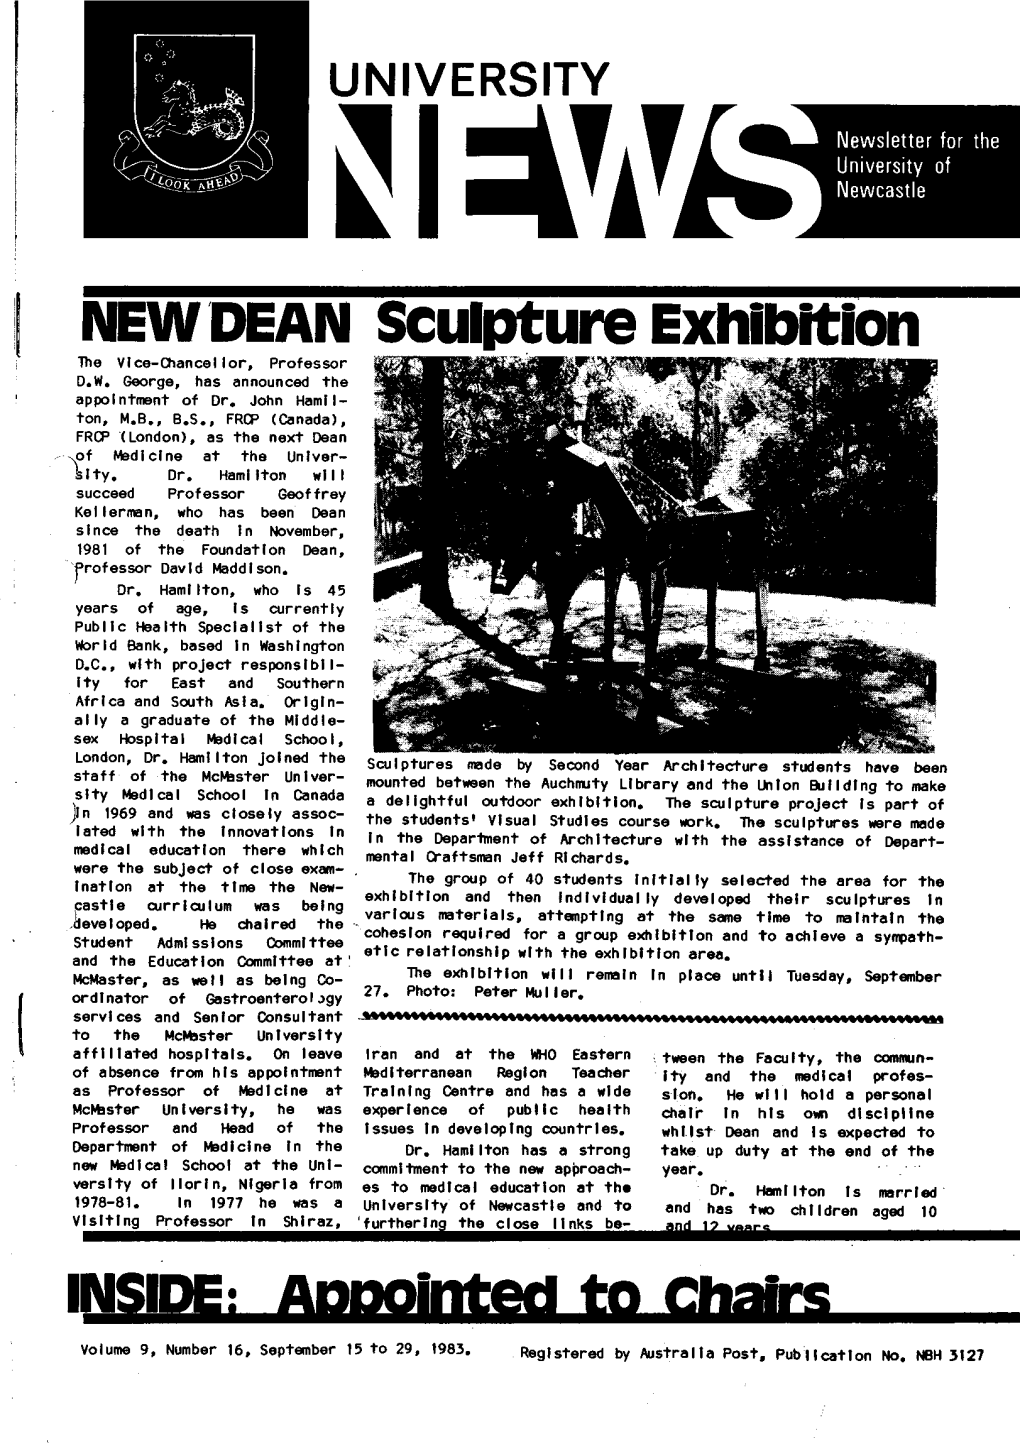 The University News, Vol. 9, No. 16, September 15-29, 1983